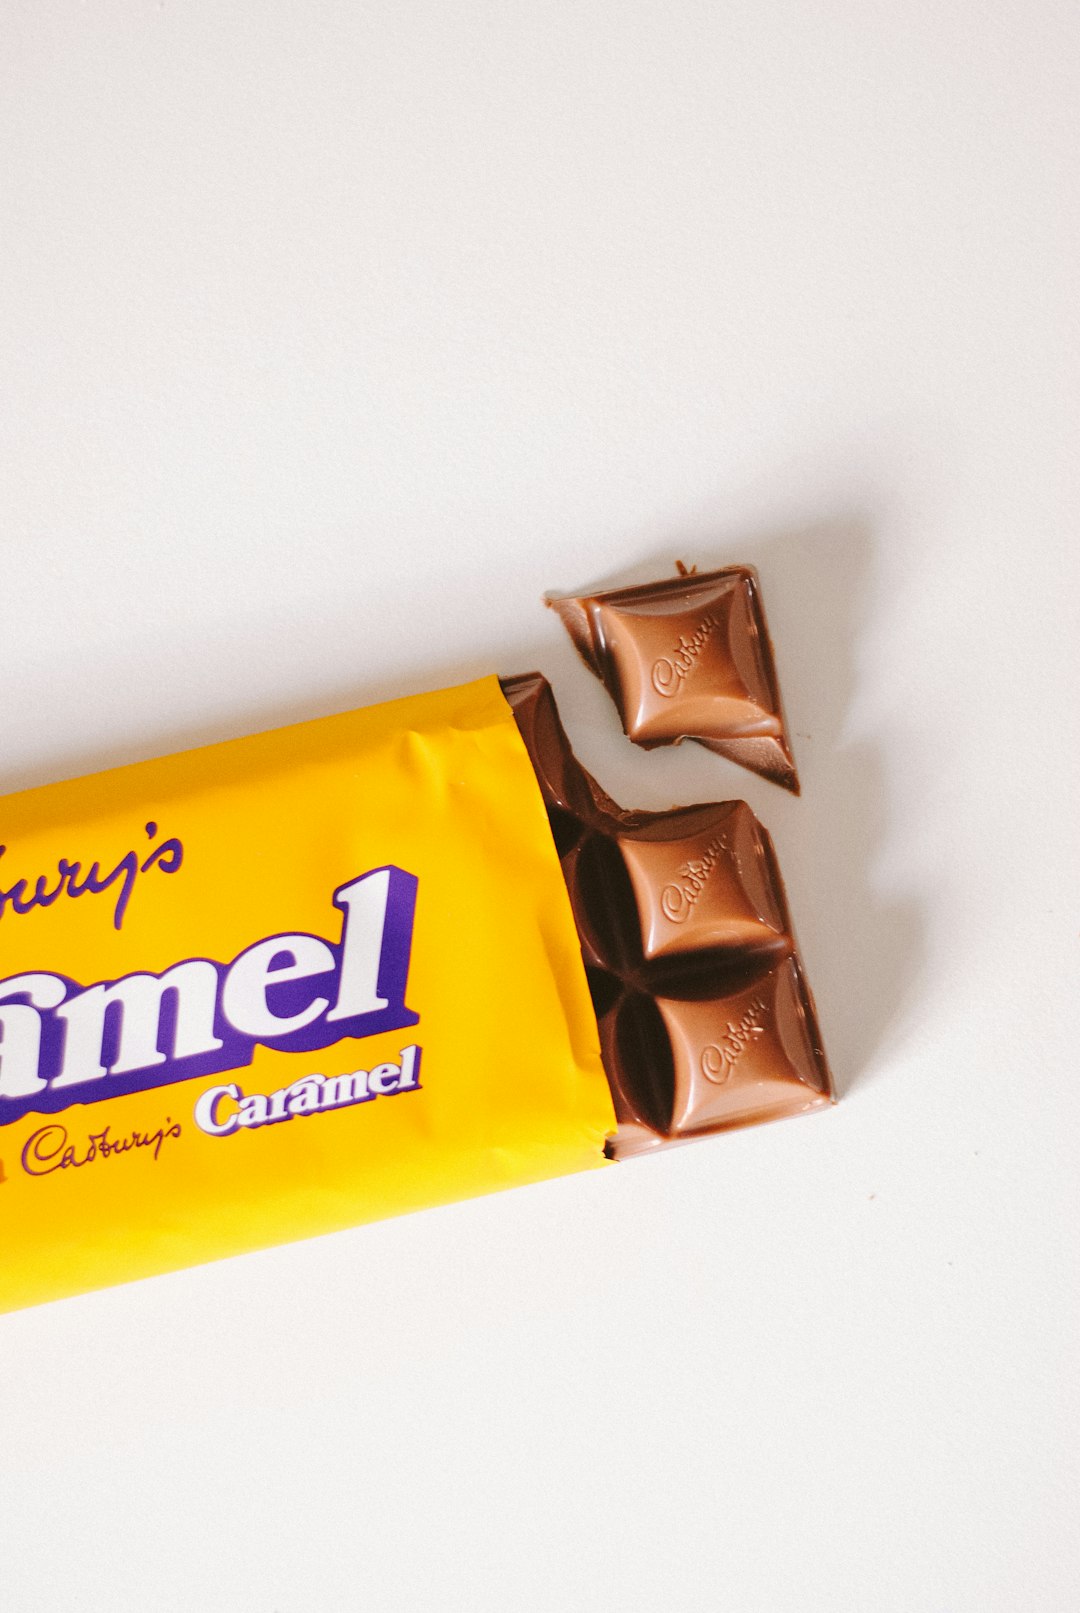 Cadburry's caramel chocolate pack